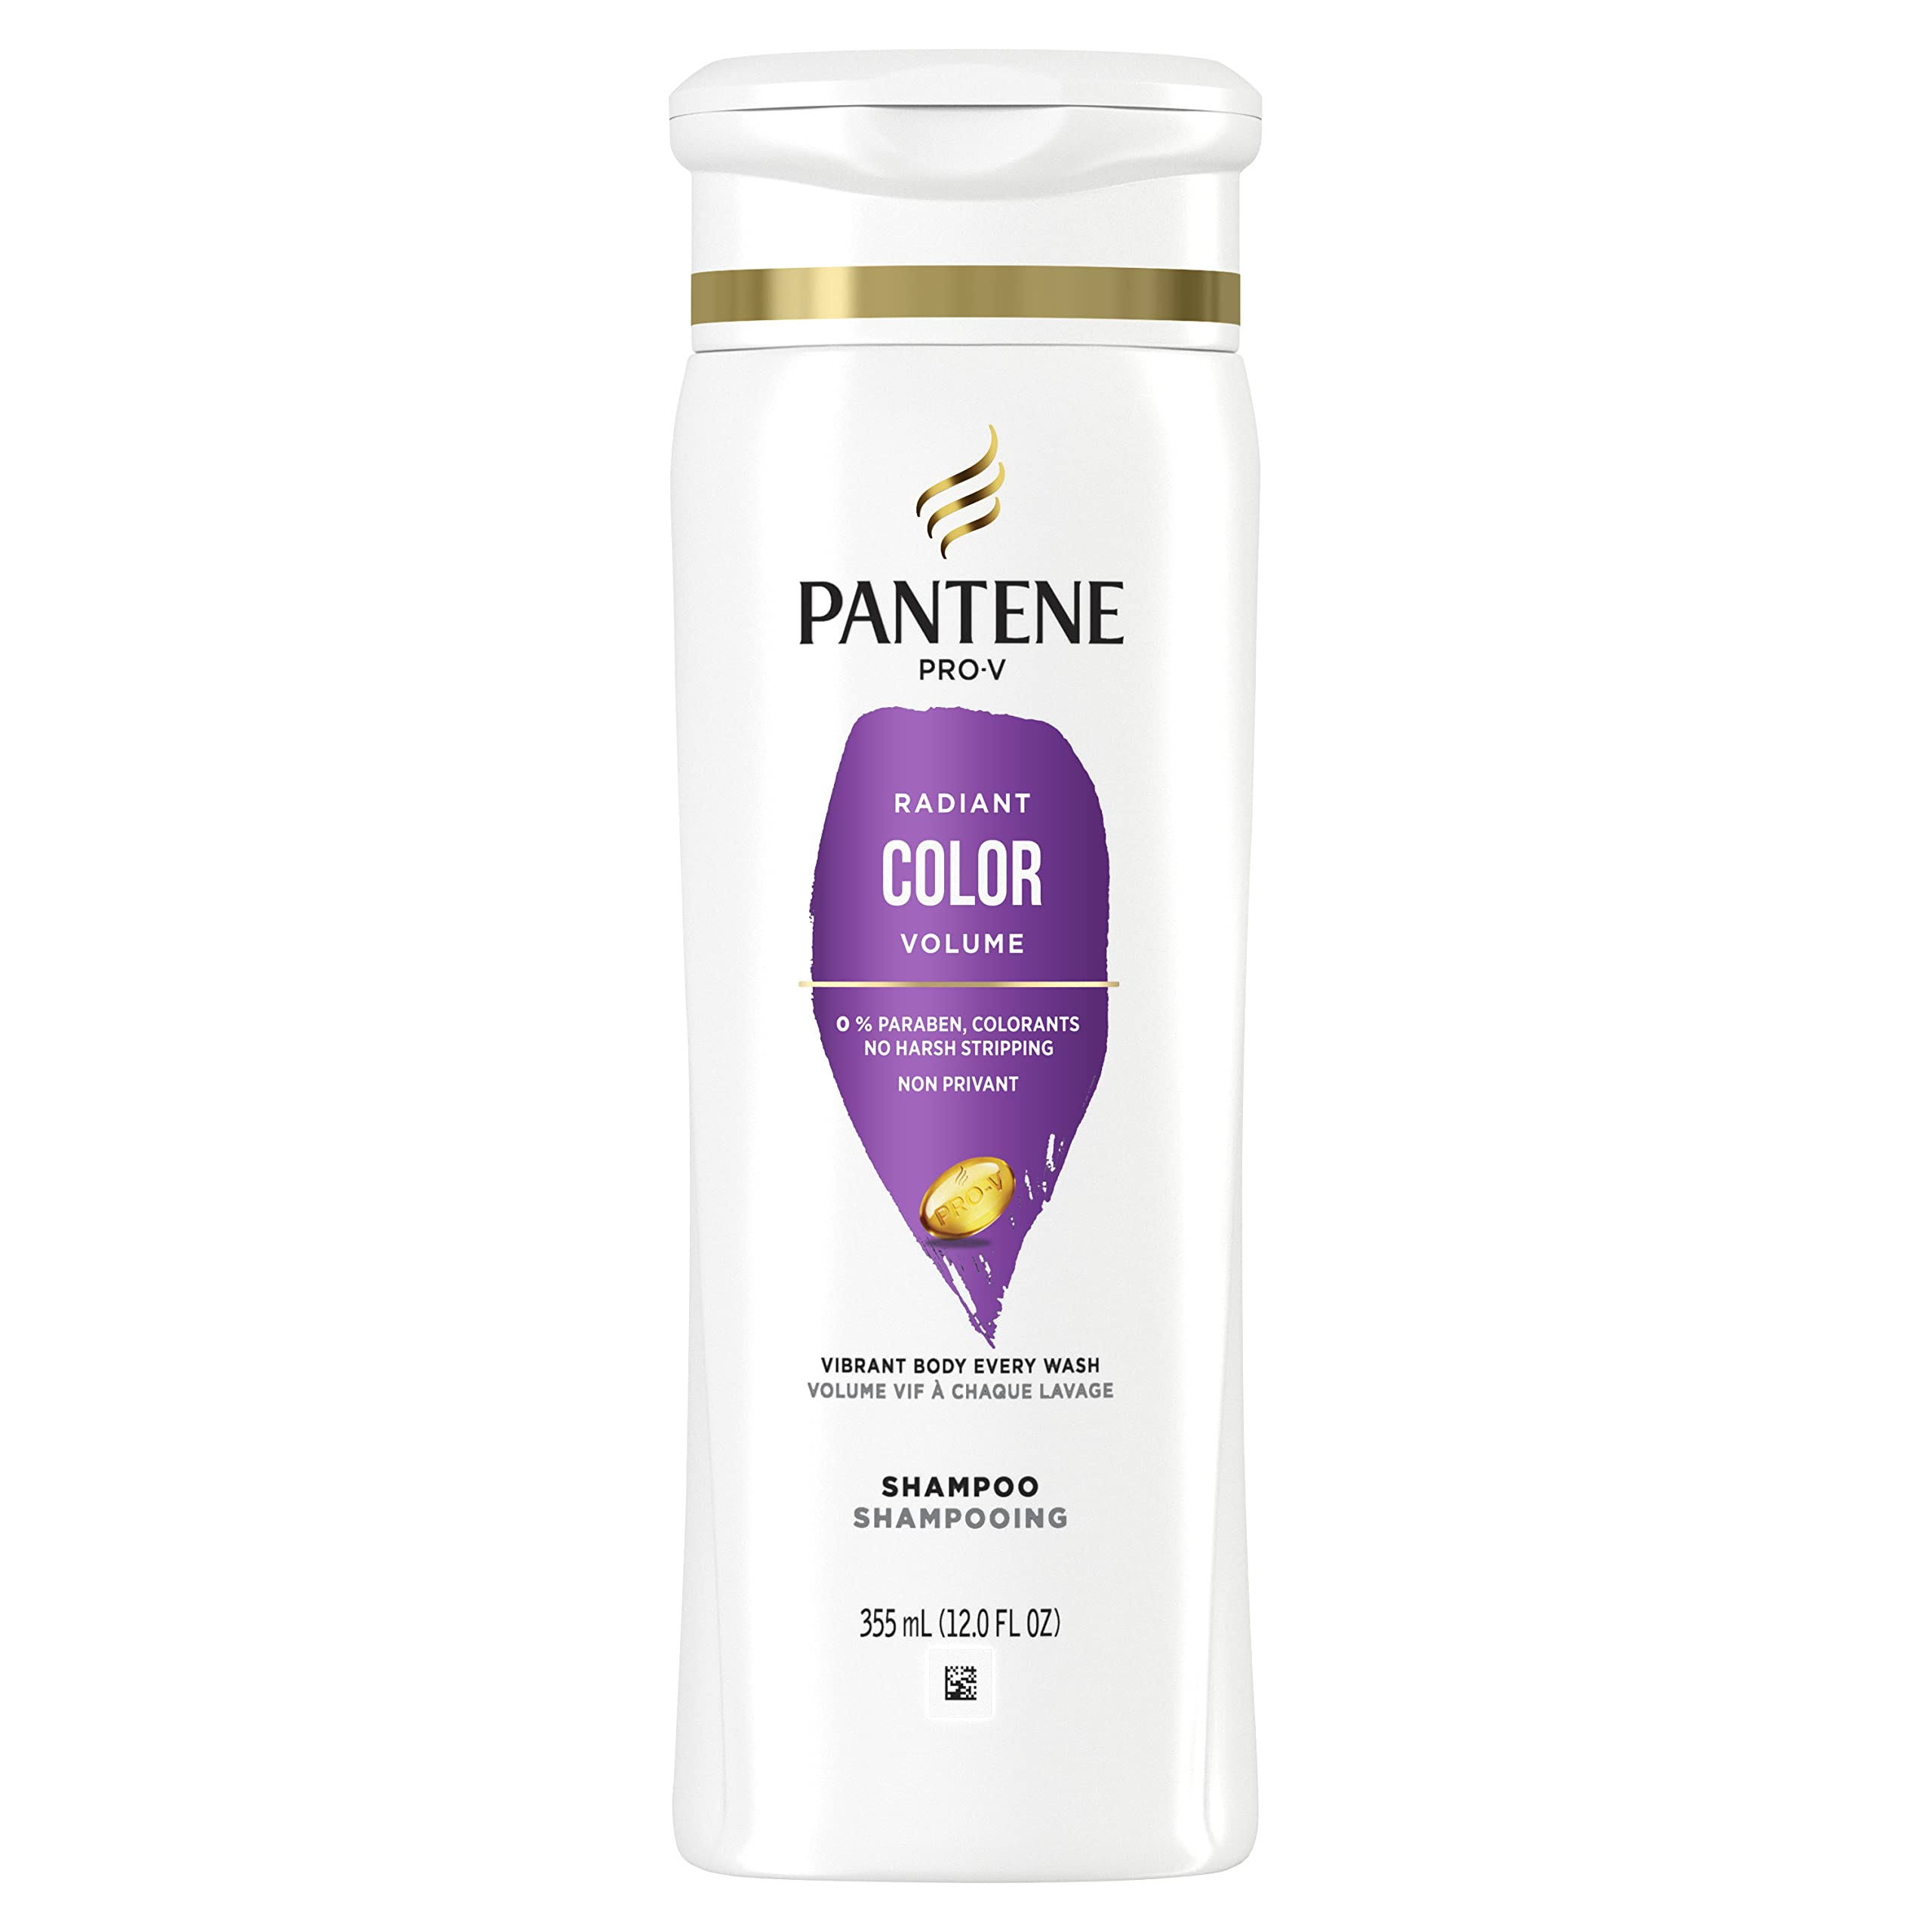 Pantene Radiant Color Volume Shampoo